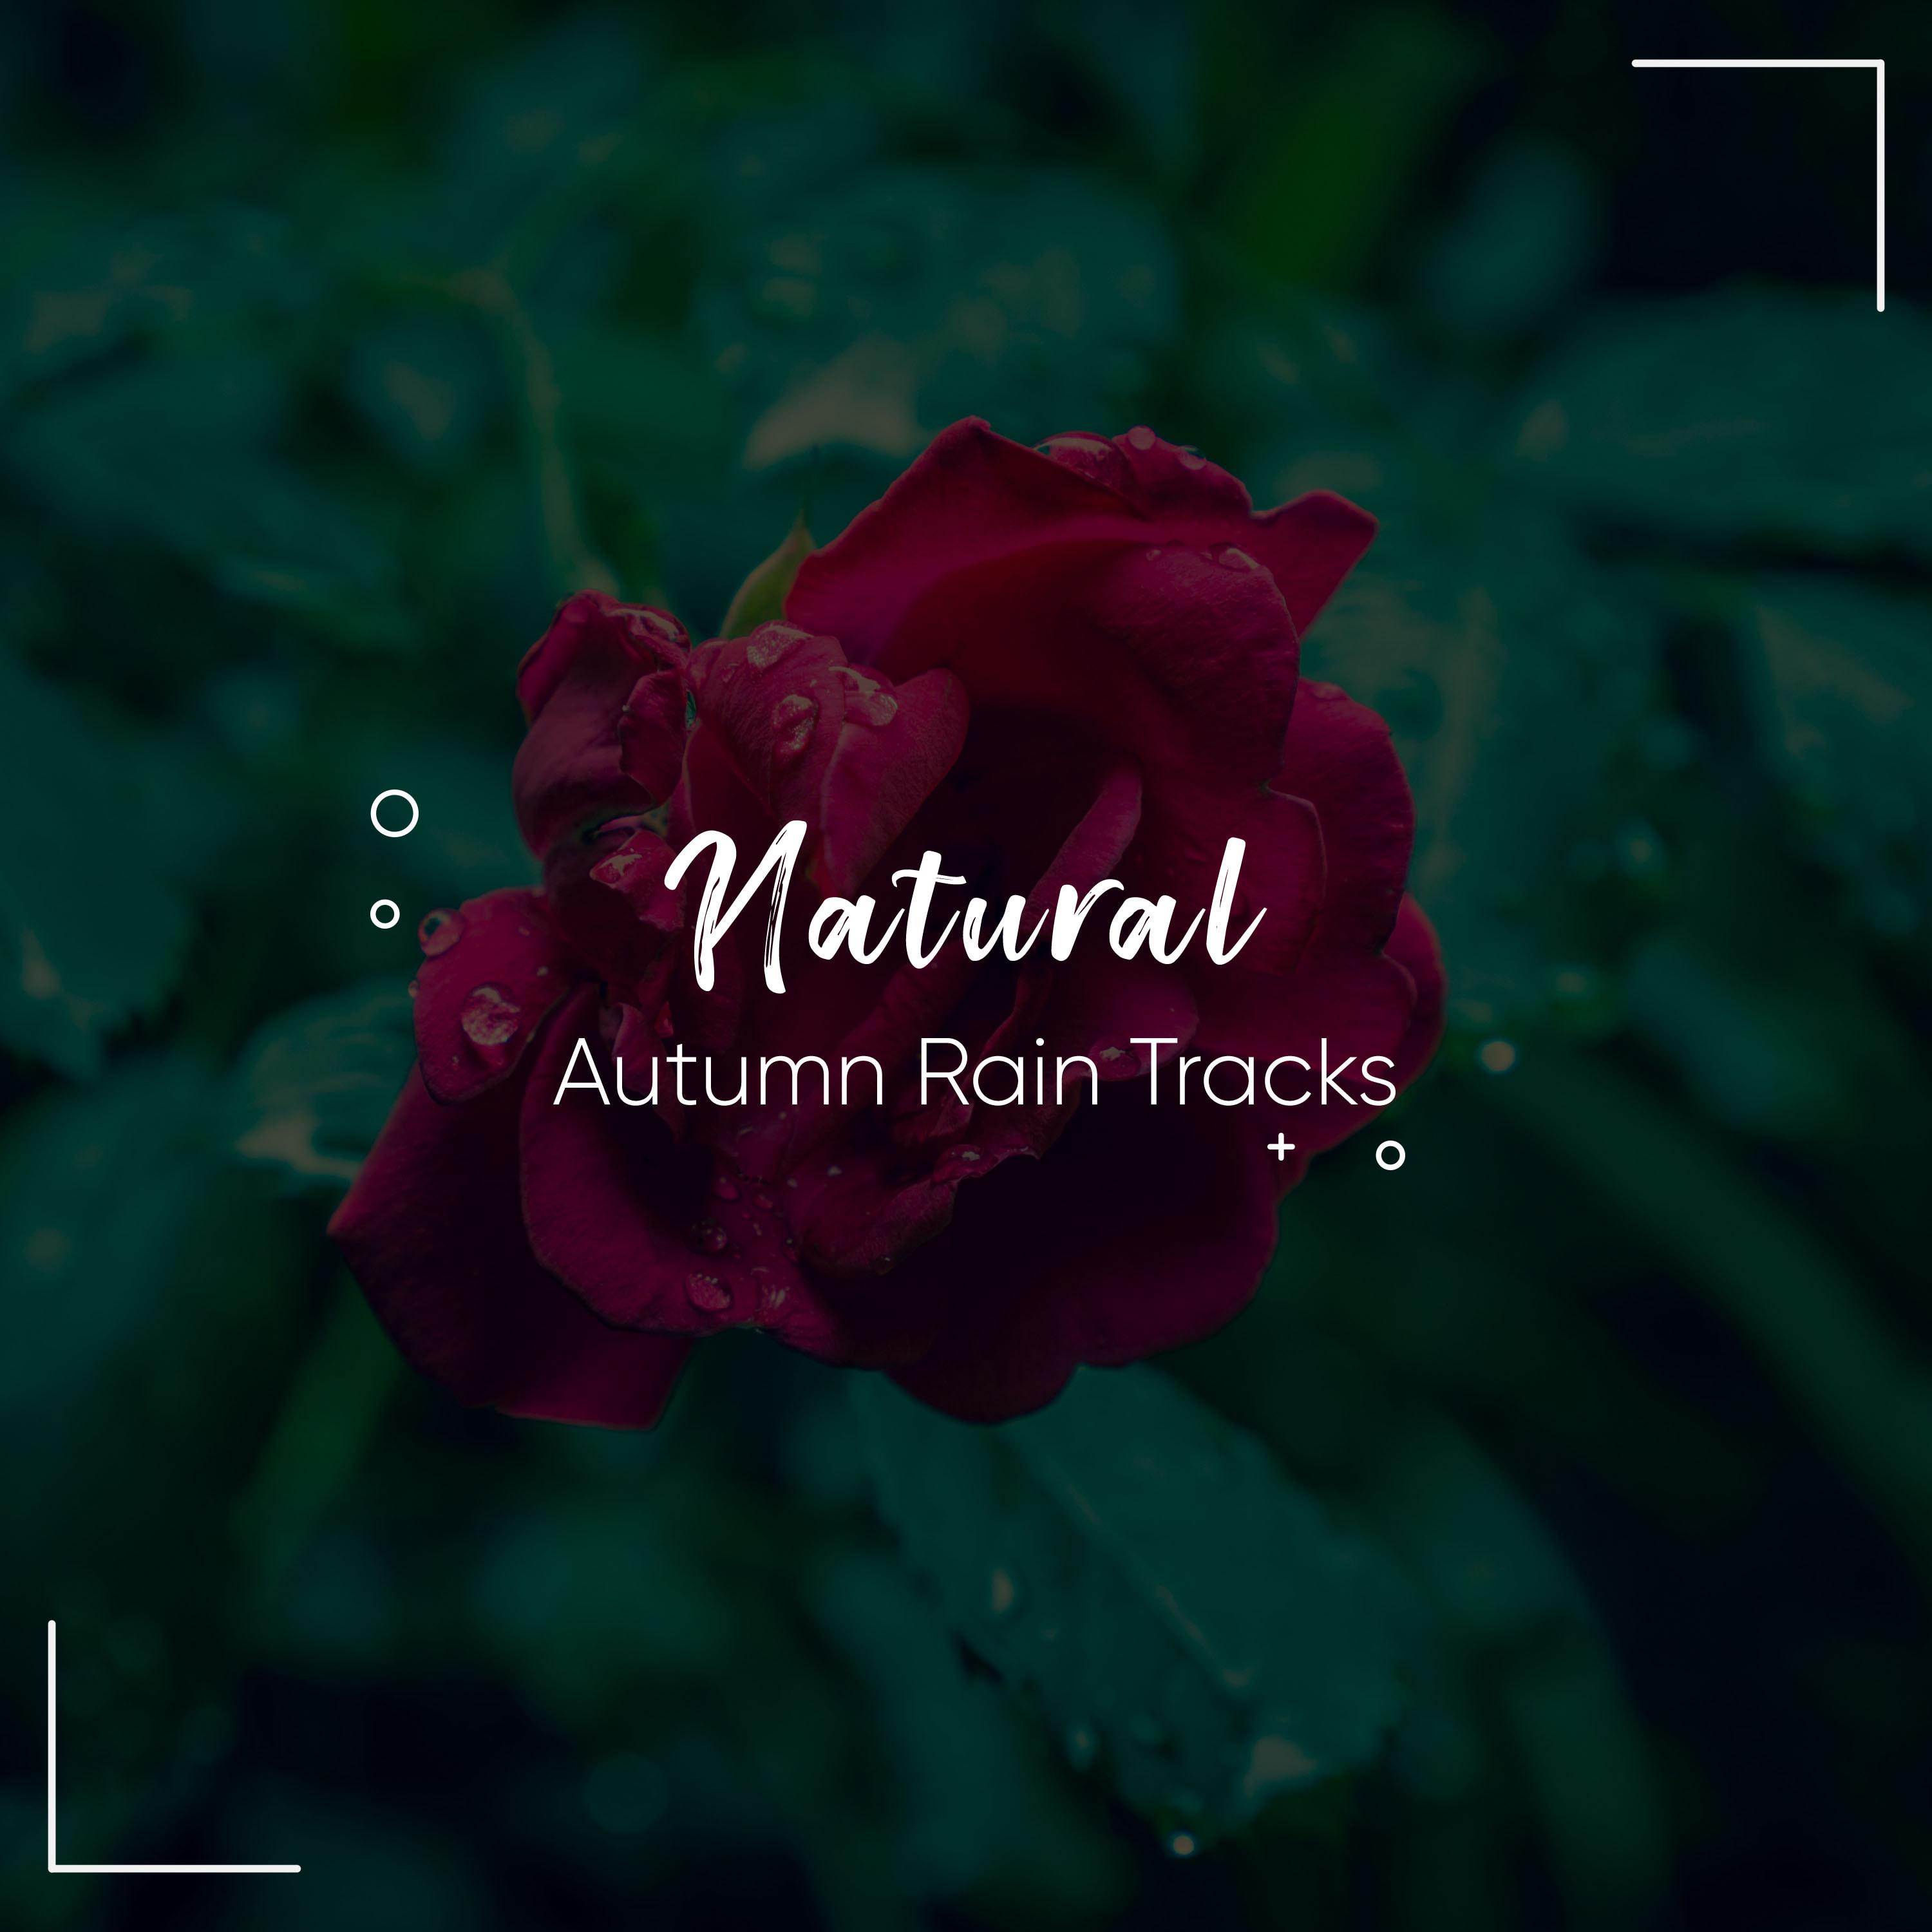 #19 Natural Autumn Rain Tracks from Nature